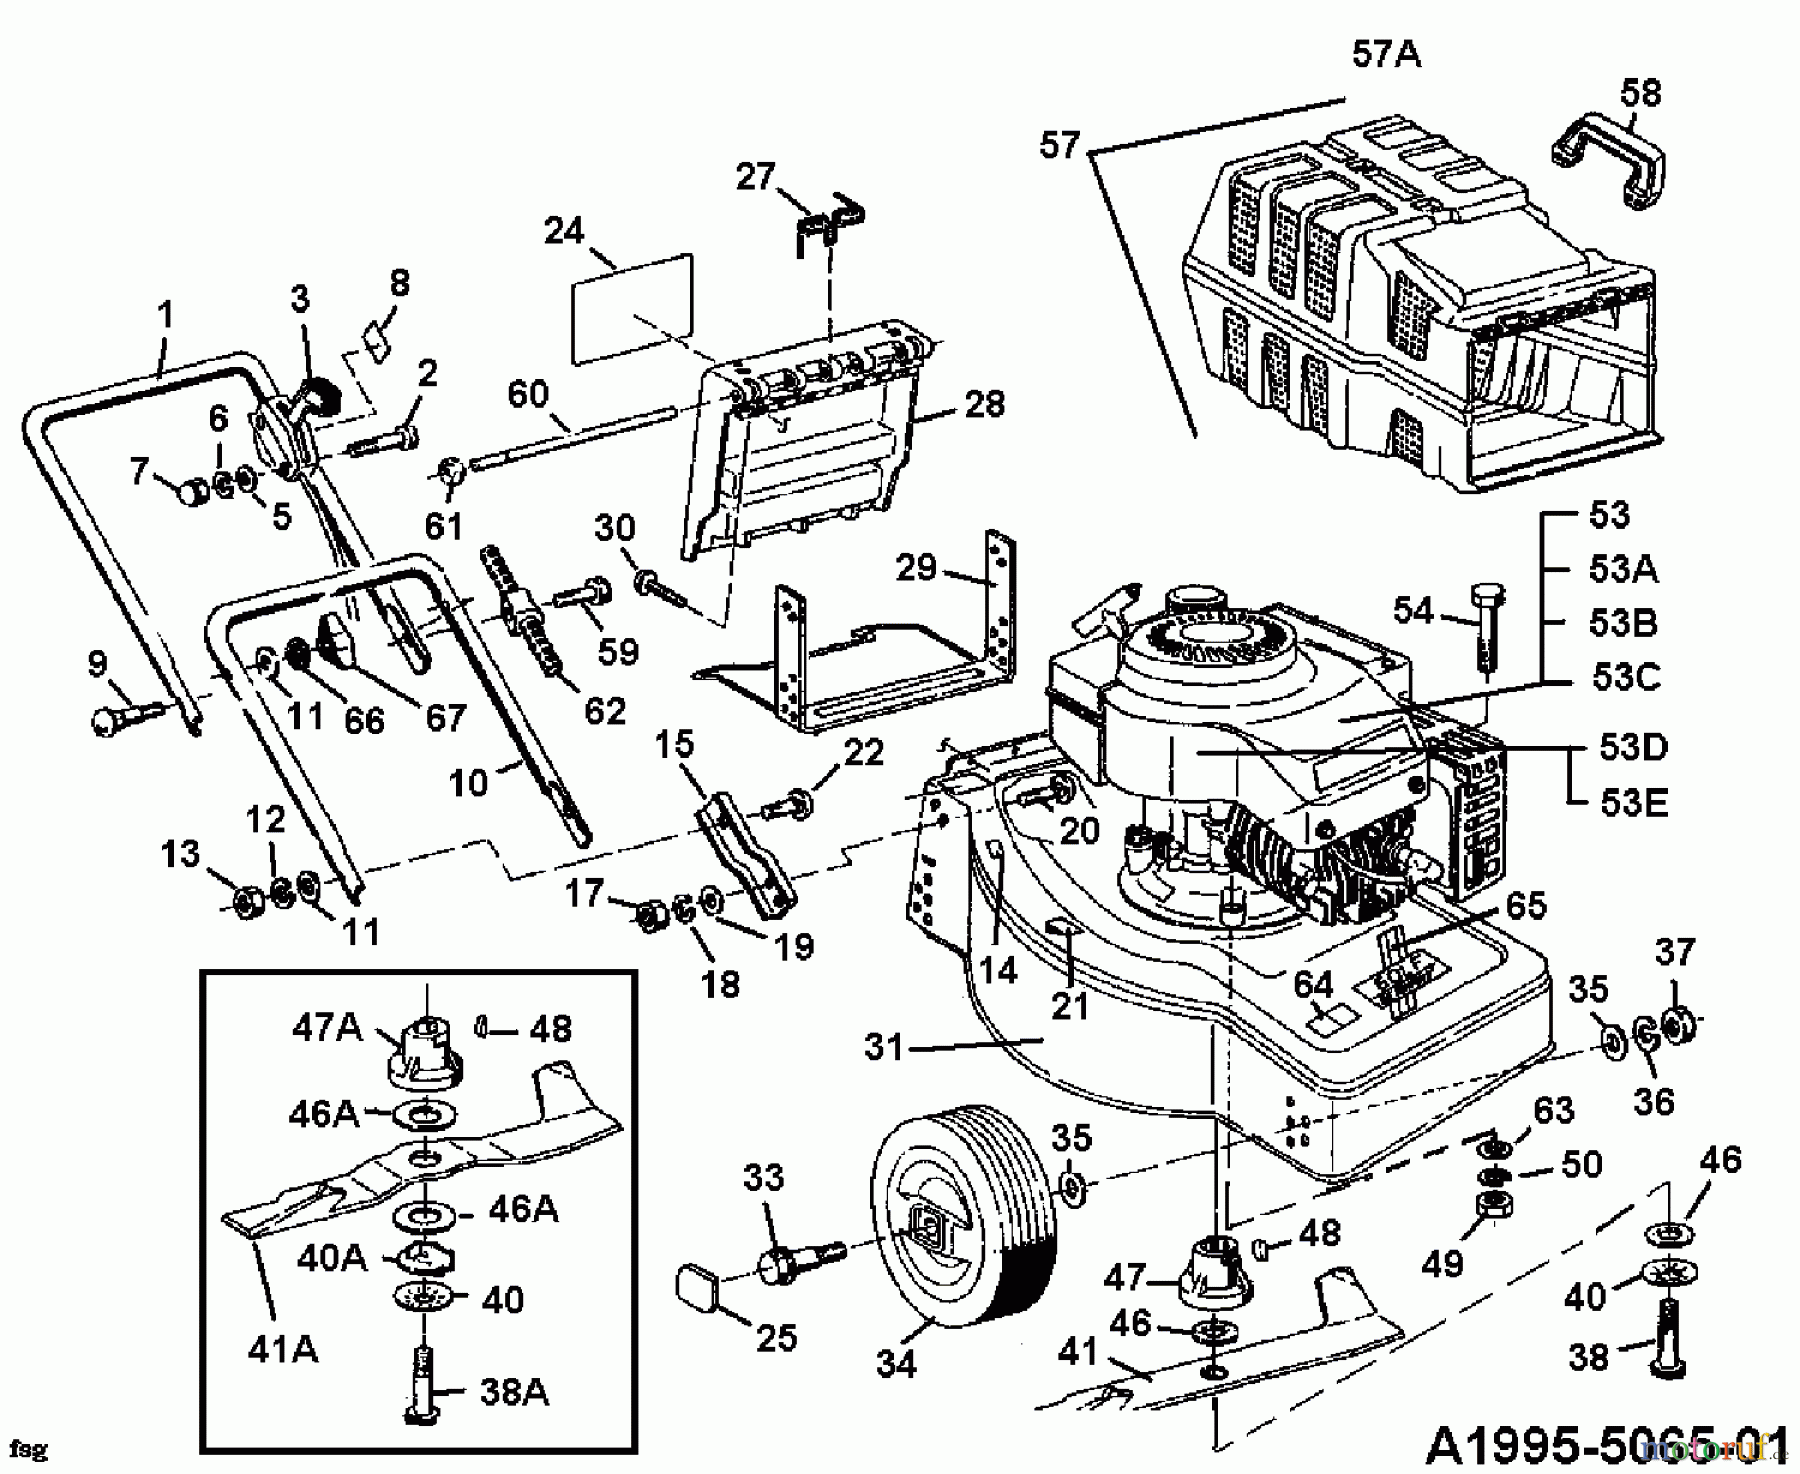  Golf Petrol mower Golf B 02813.04  (1995) Basic machine